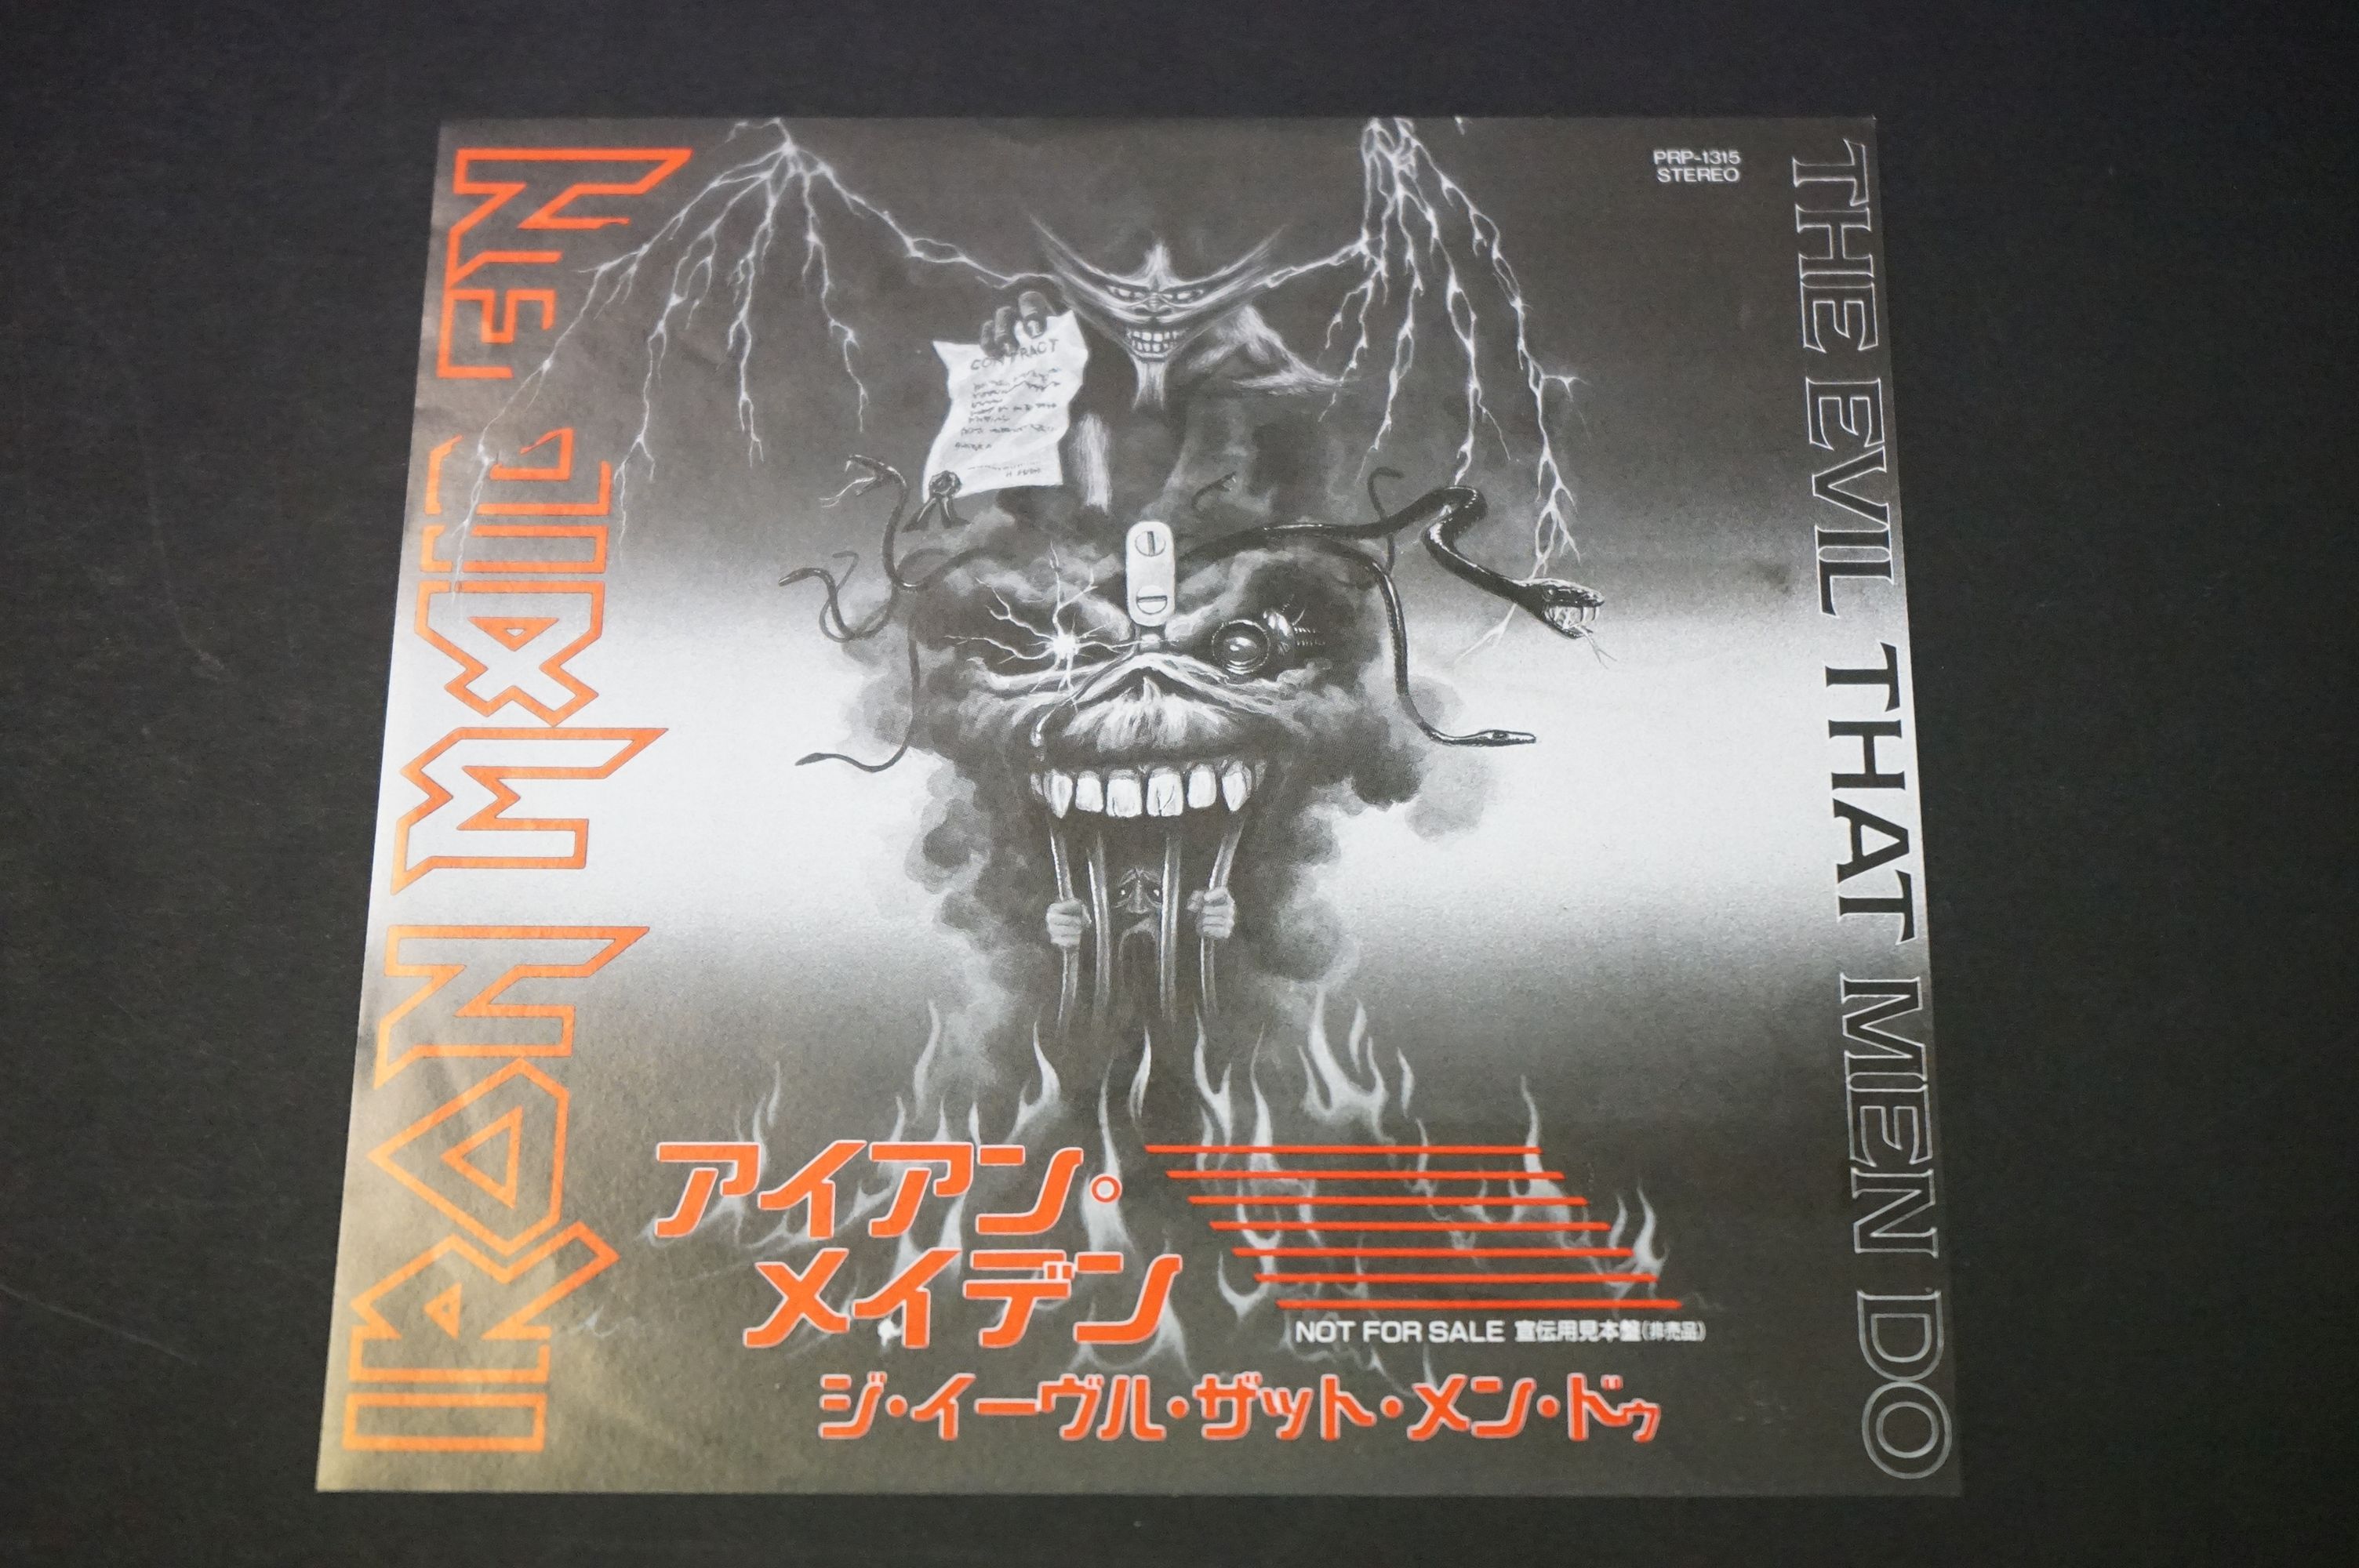 Vinyl - Iron Maiden The Evil That Men Do Japan only promo on EMI PRP-1315. NM - Image 6 of 7